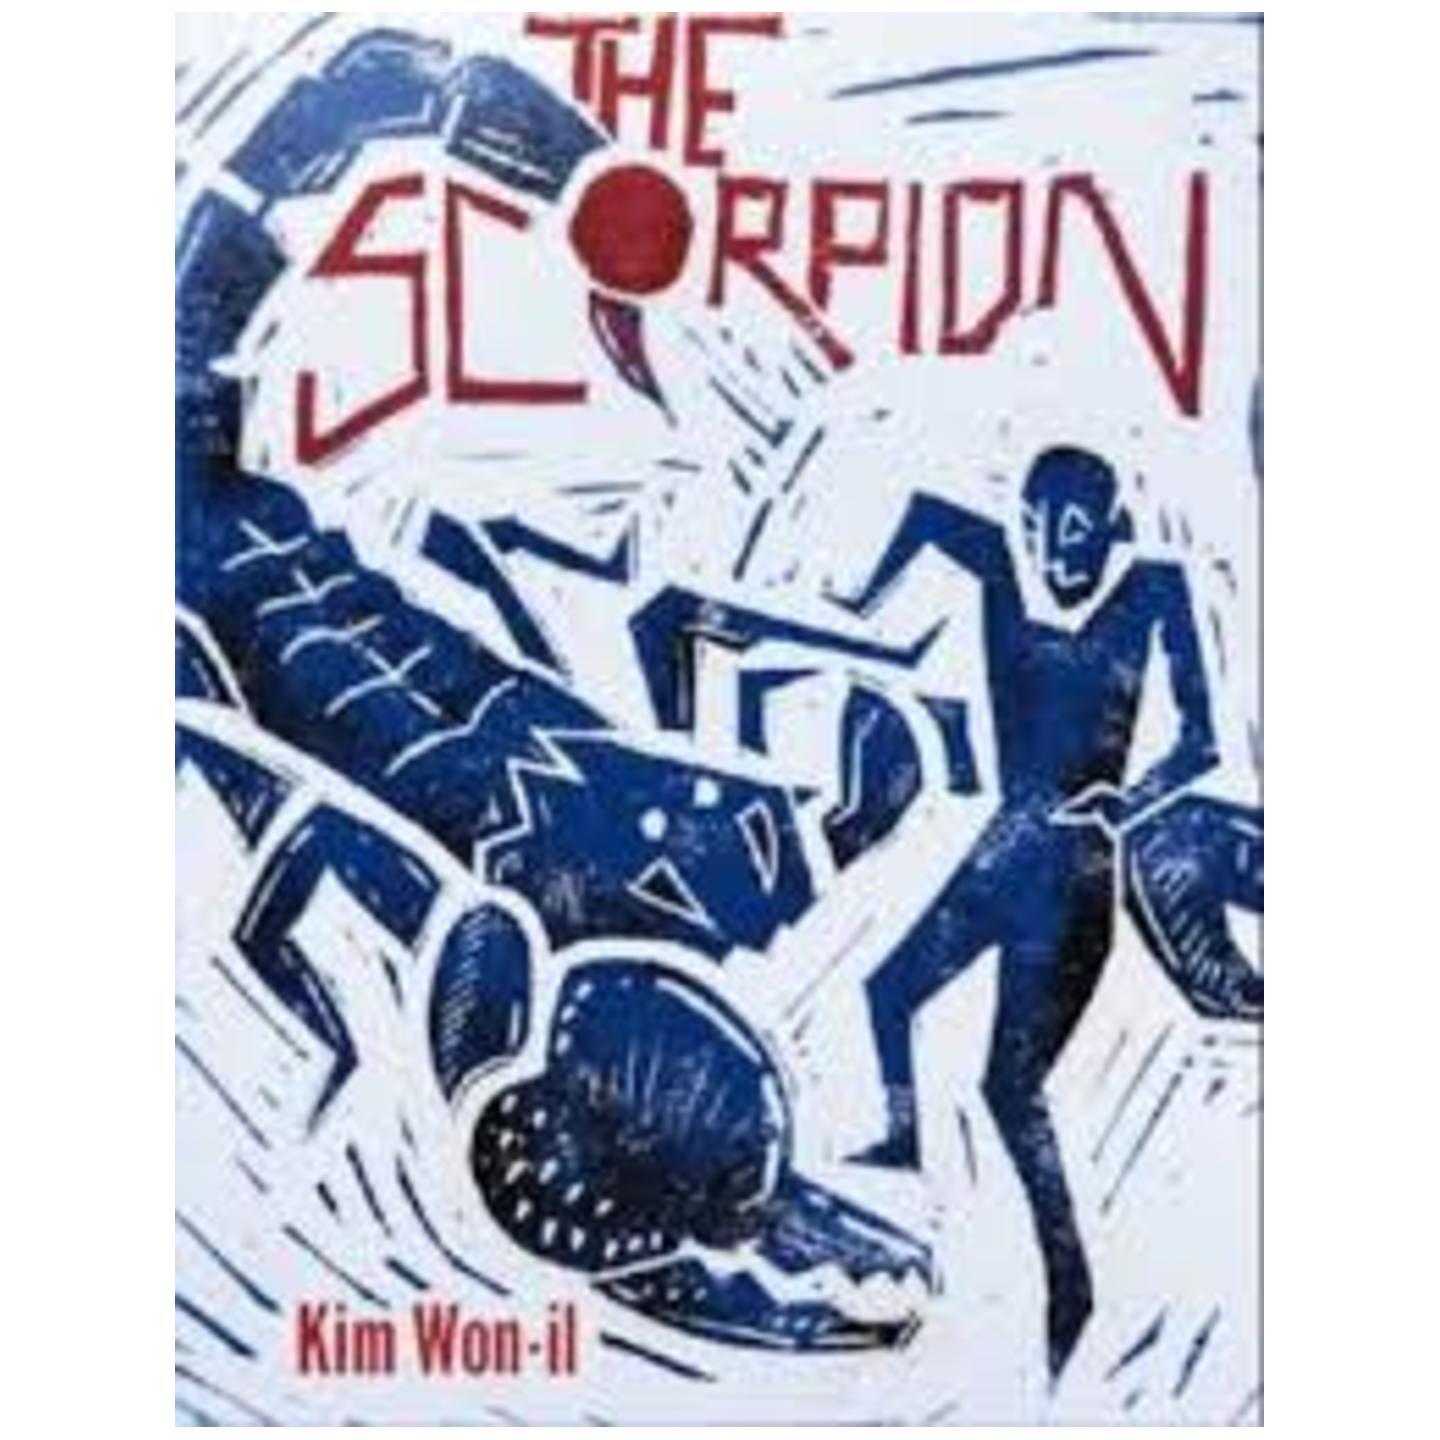 The Scorpion by Kim Won-il